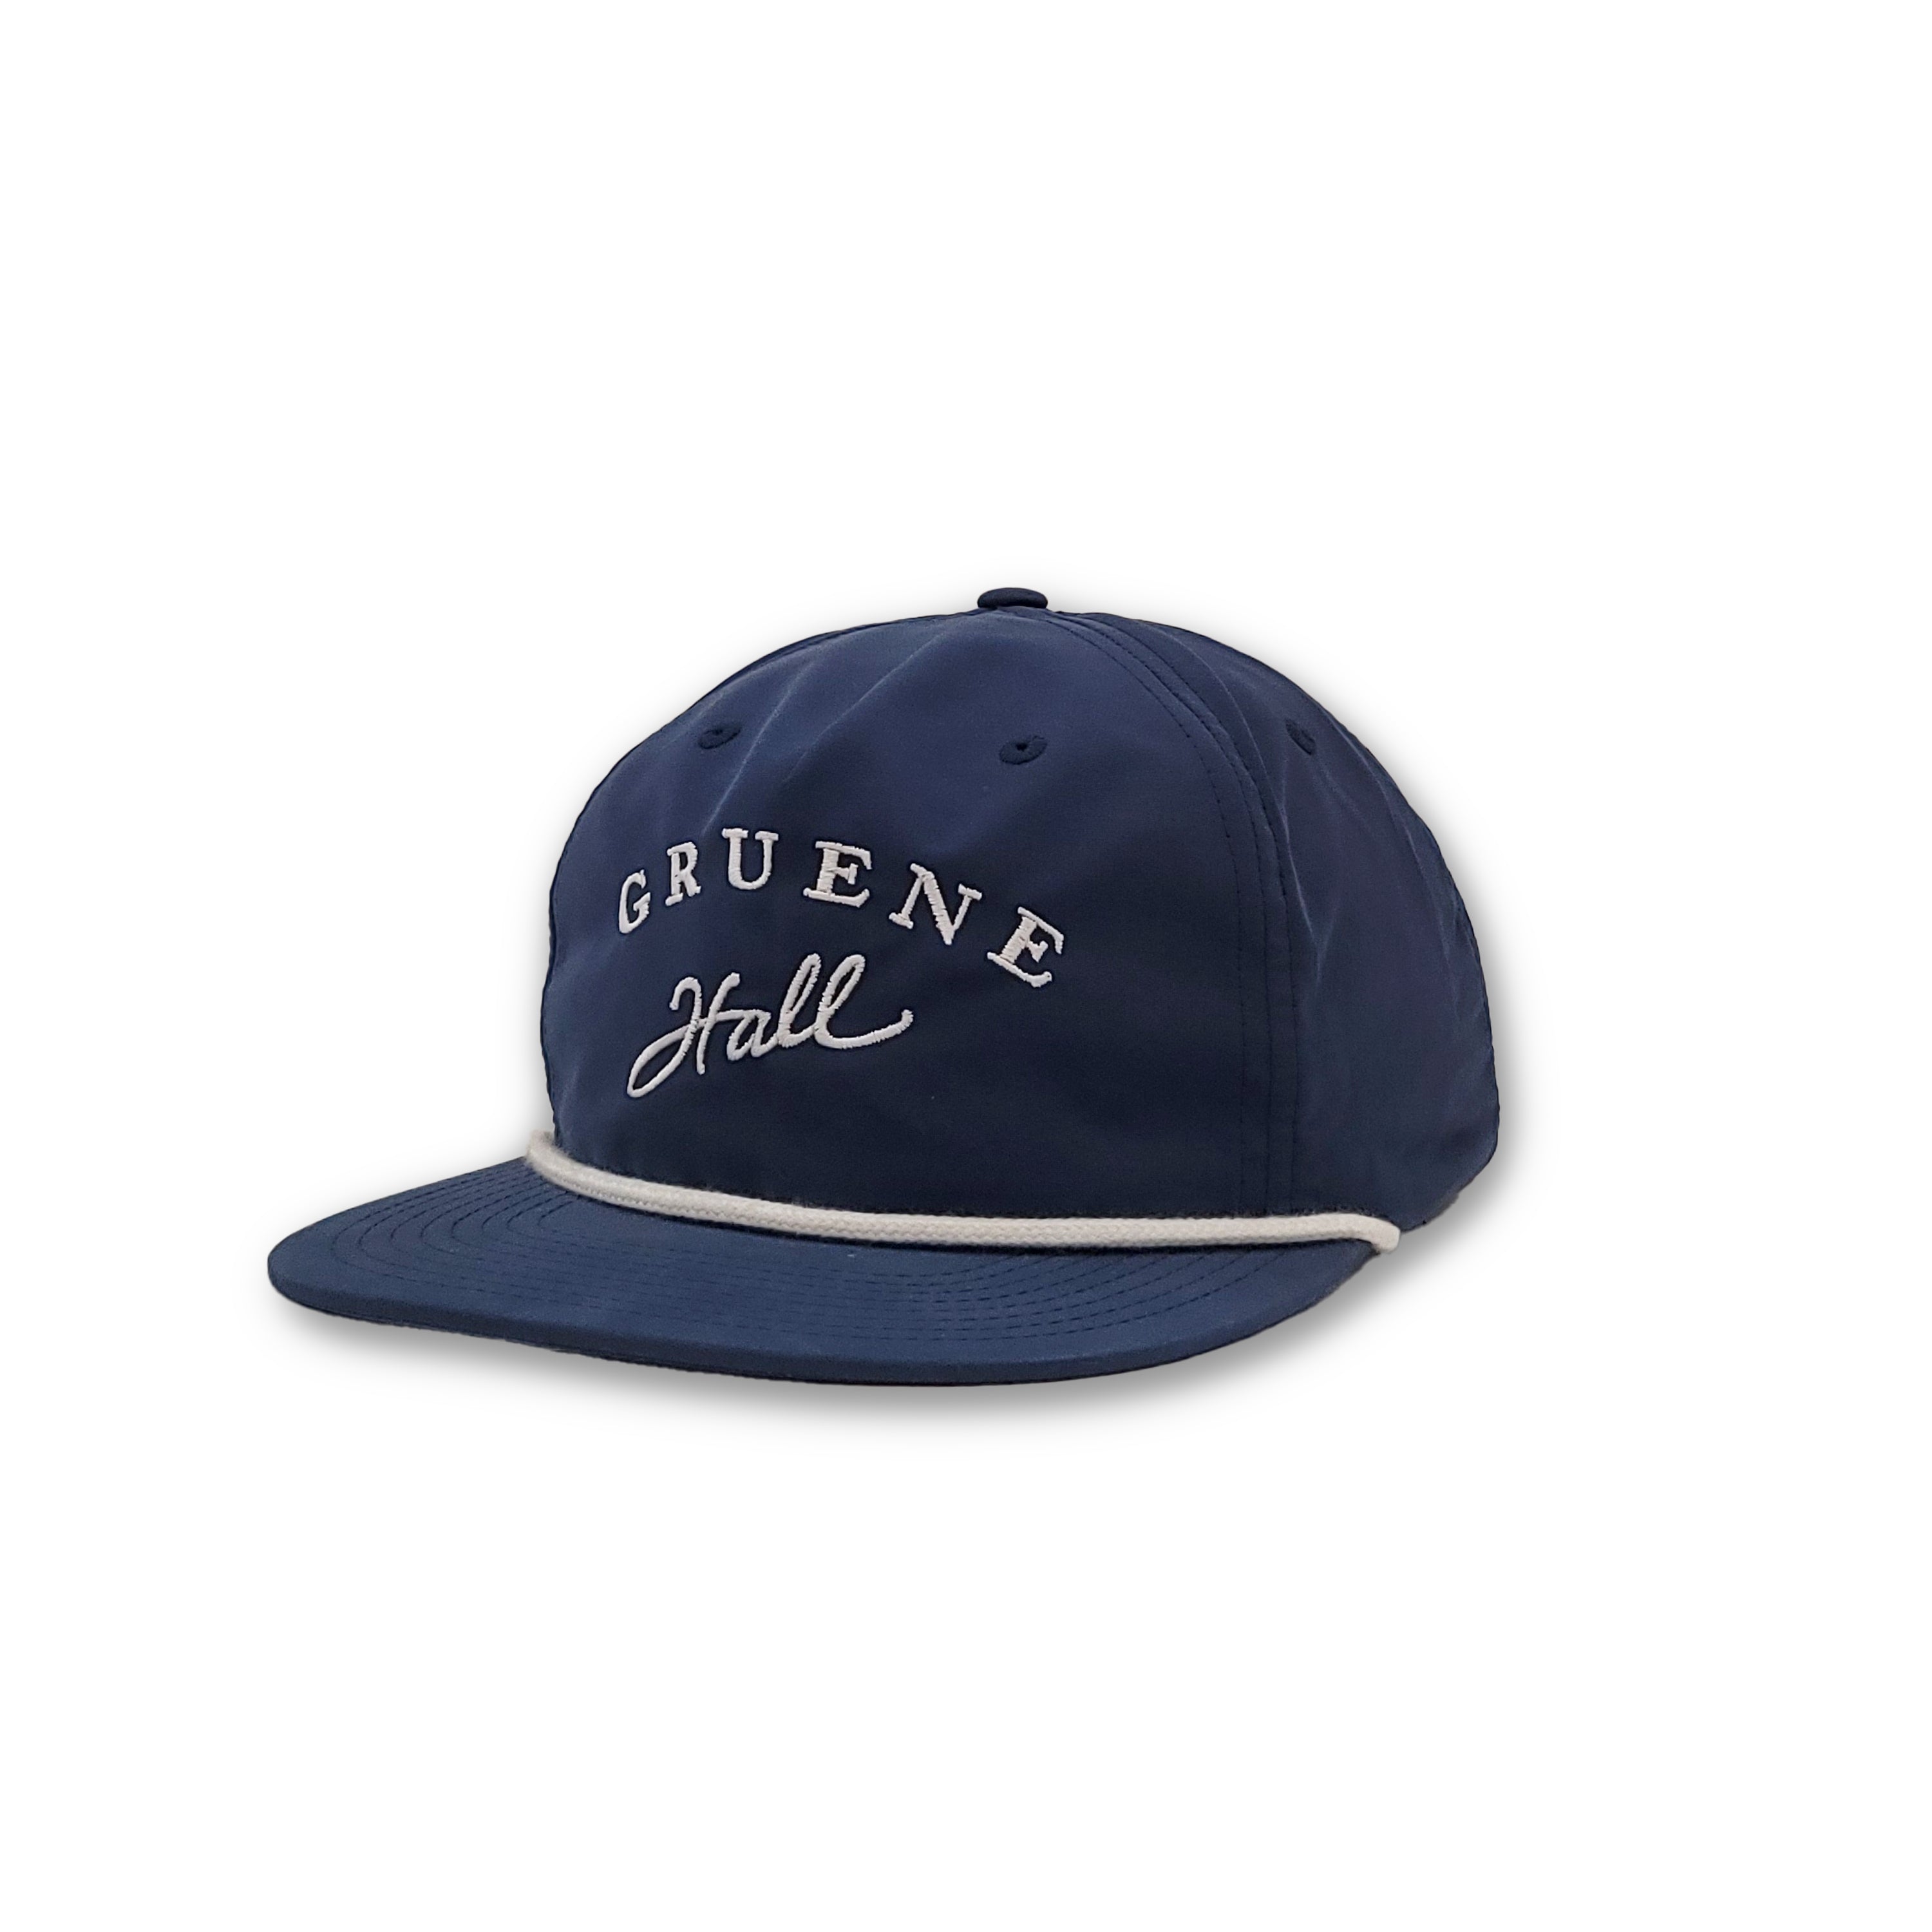 Gruene Hall logo rope hat